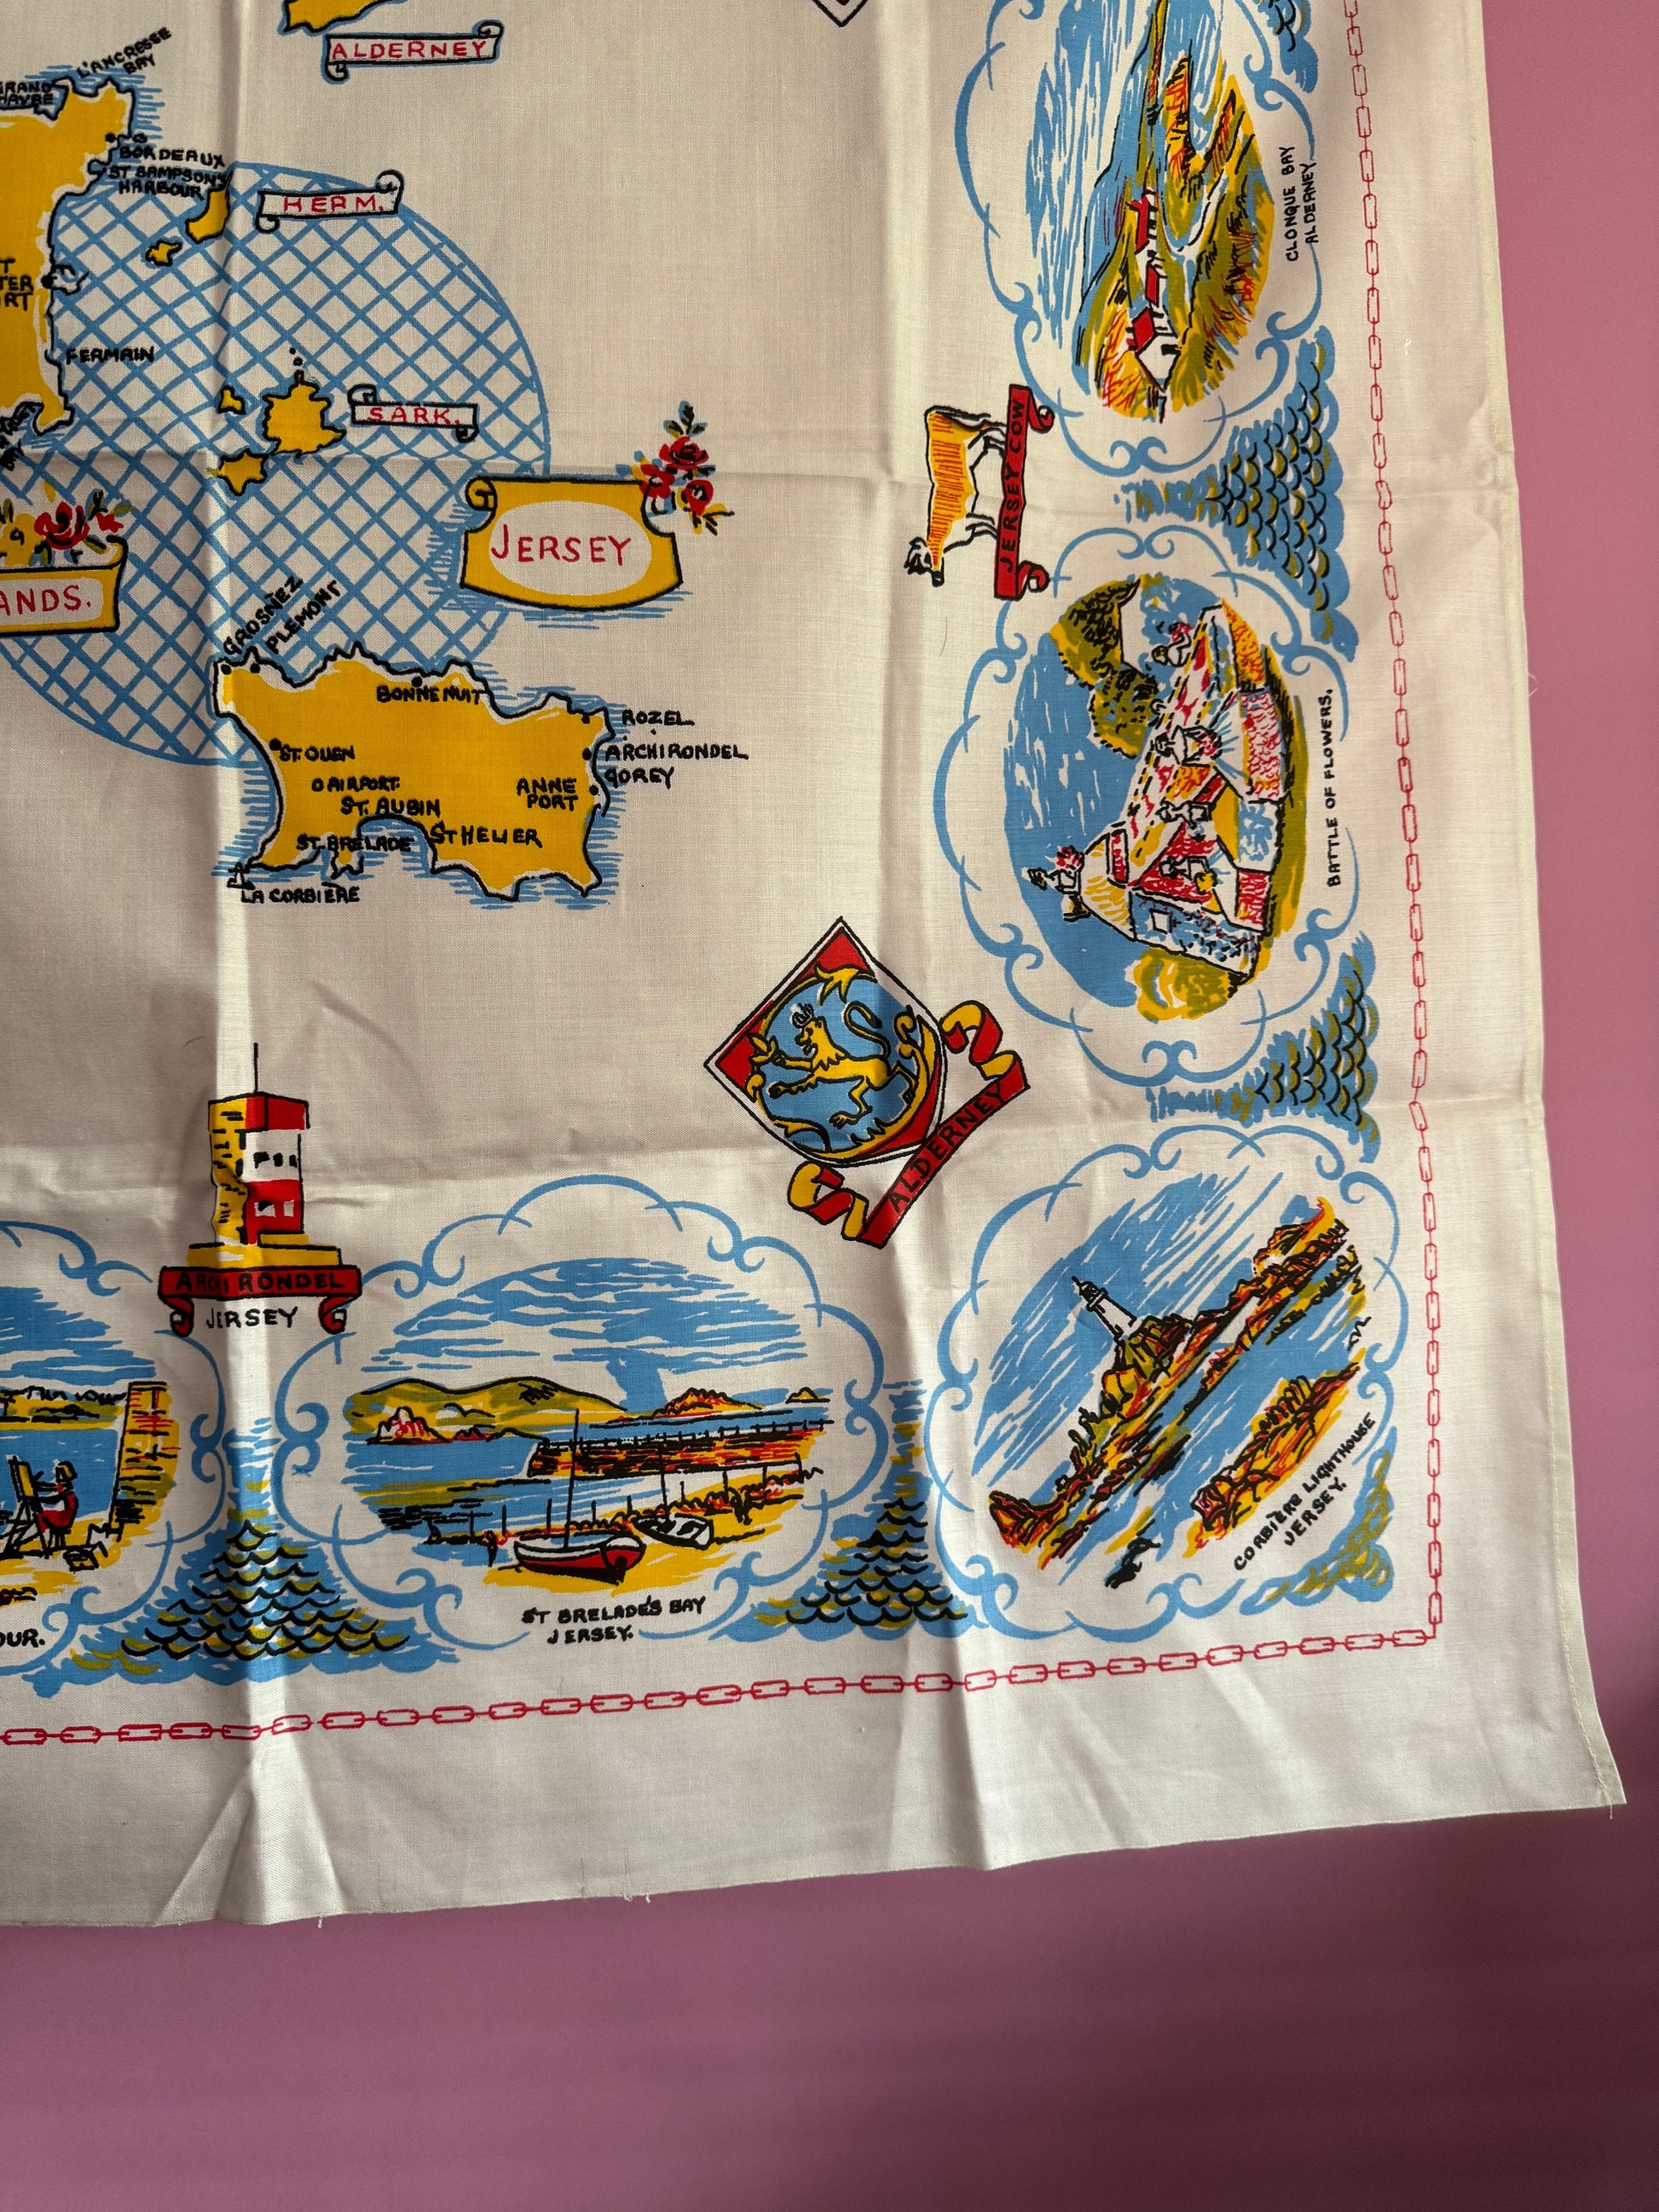 34” channel islands jersey guernsey aldernay Vintage printed souvenir tablecloth towns landmarks